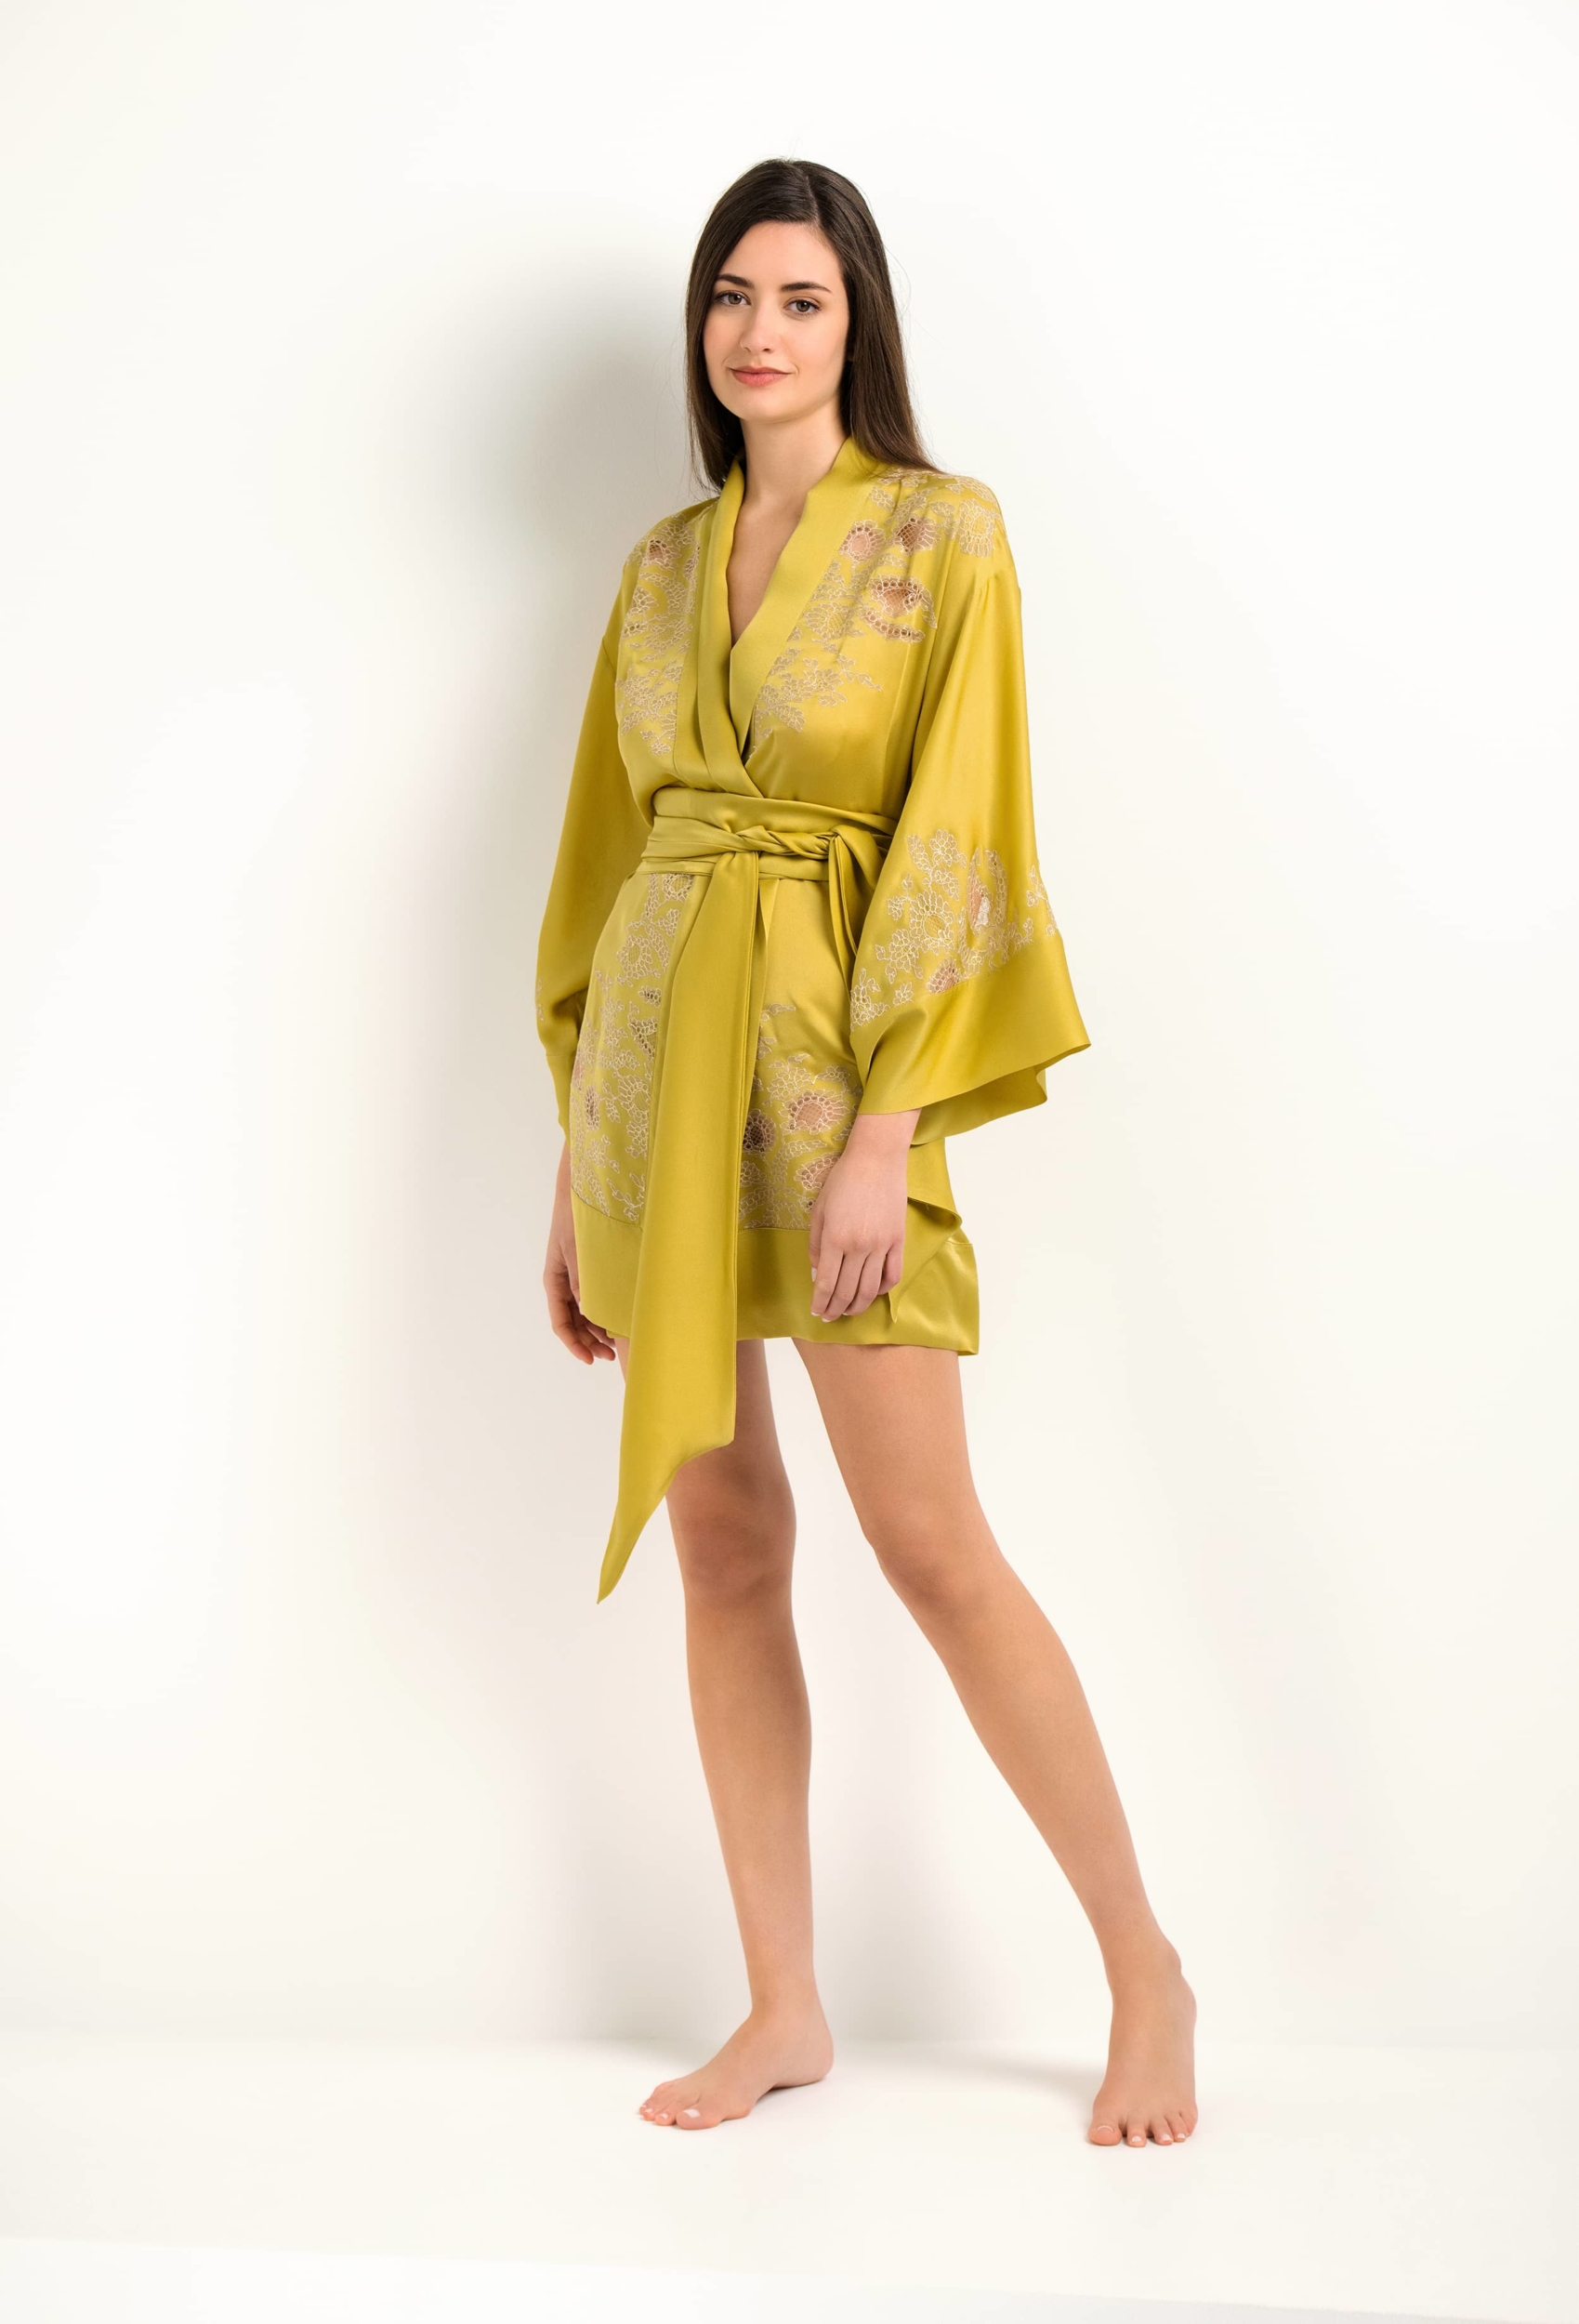 linen dusty and Short silk - Paradise lace - yellow kimono Carine Gilson